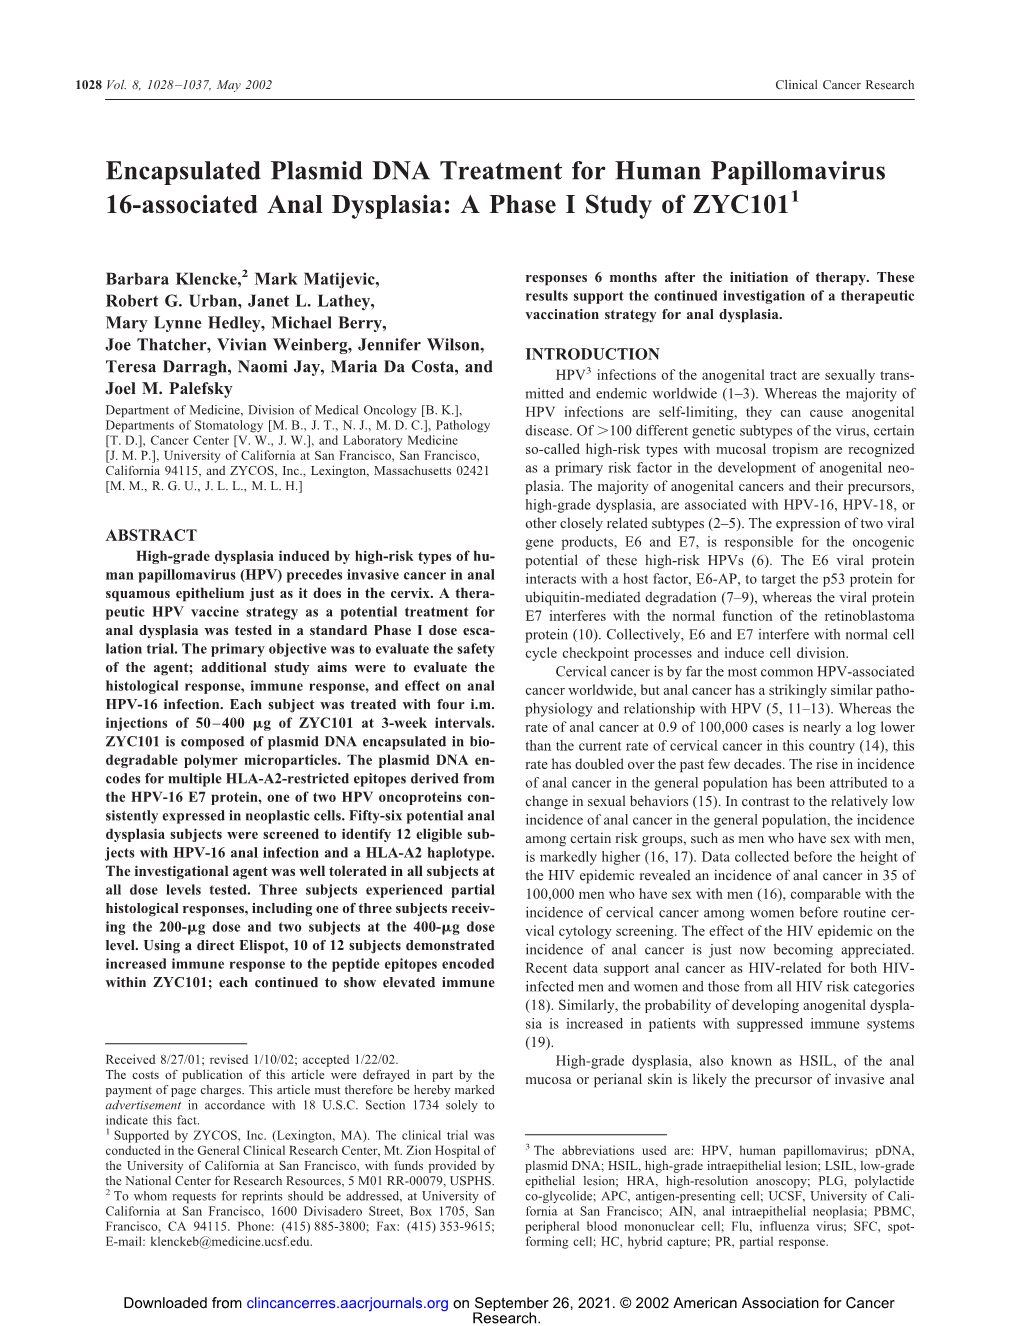 Encapsulated Plasmid DNA Treatment for Human Papillomavirus 16-Associated Anal Dysplasia: a Phase I Study of ZYC1011